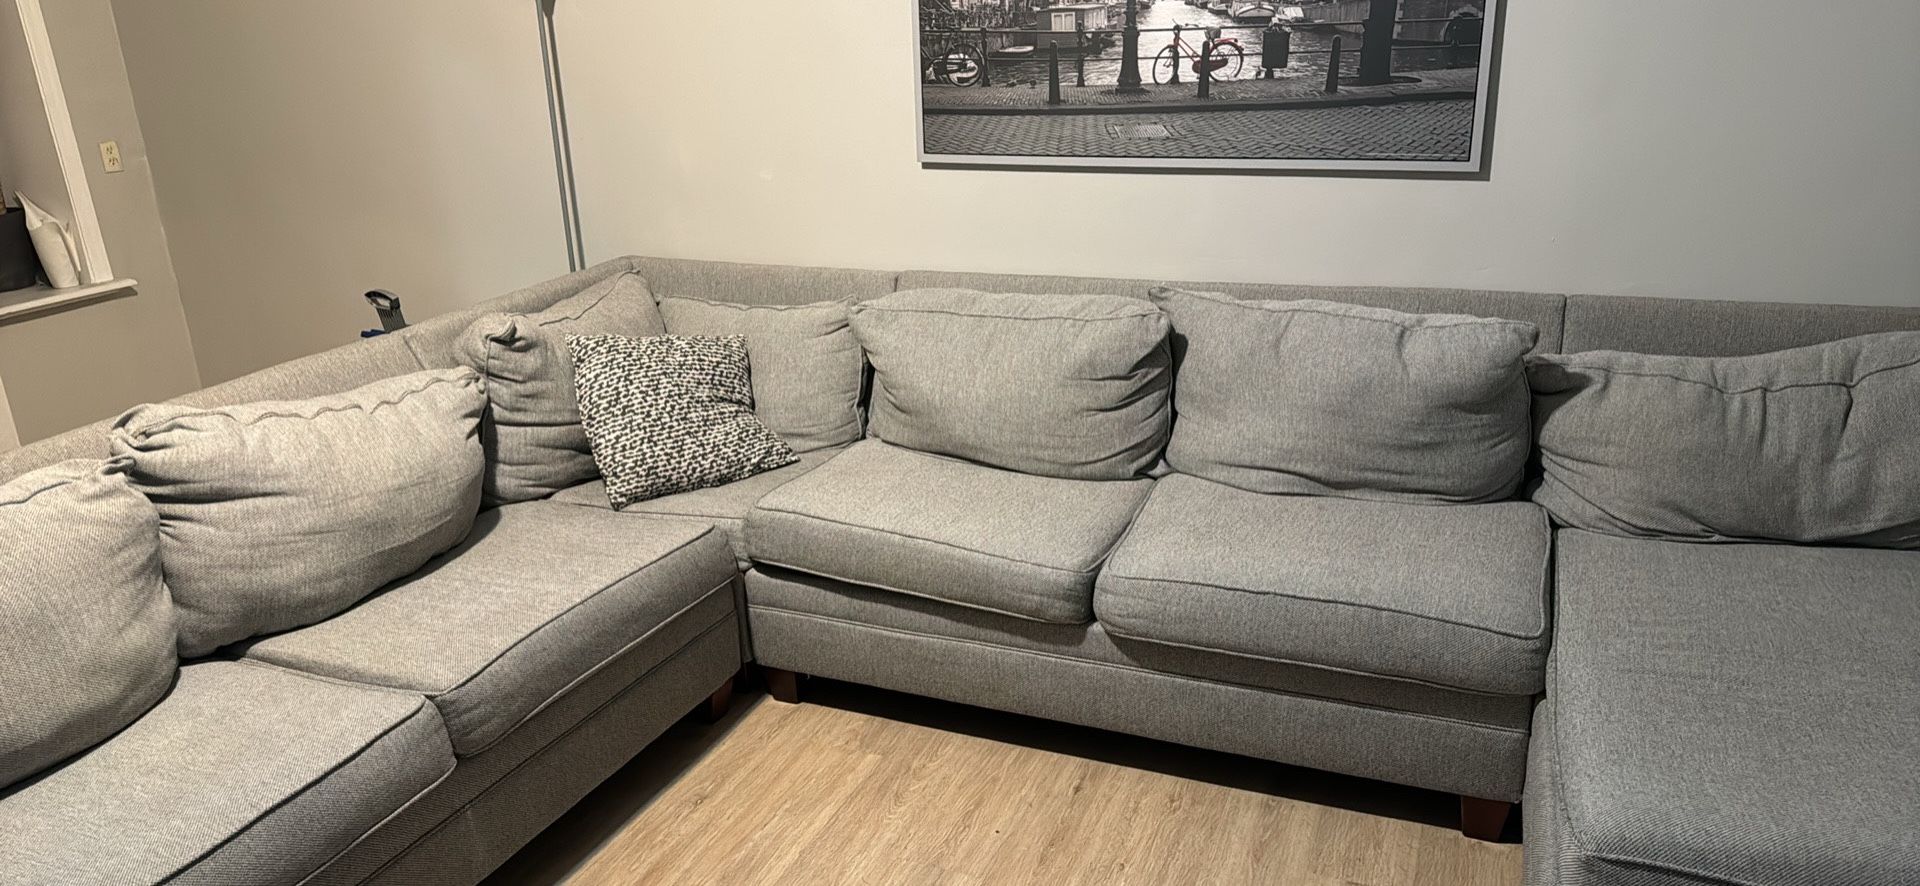 Sofa For Sale $500